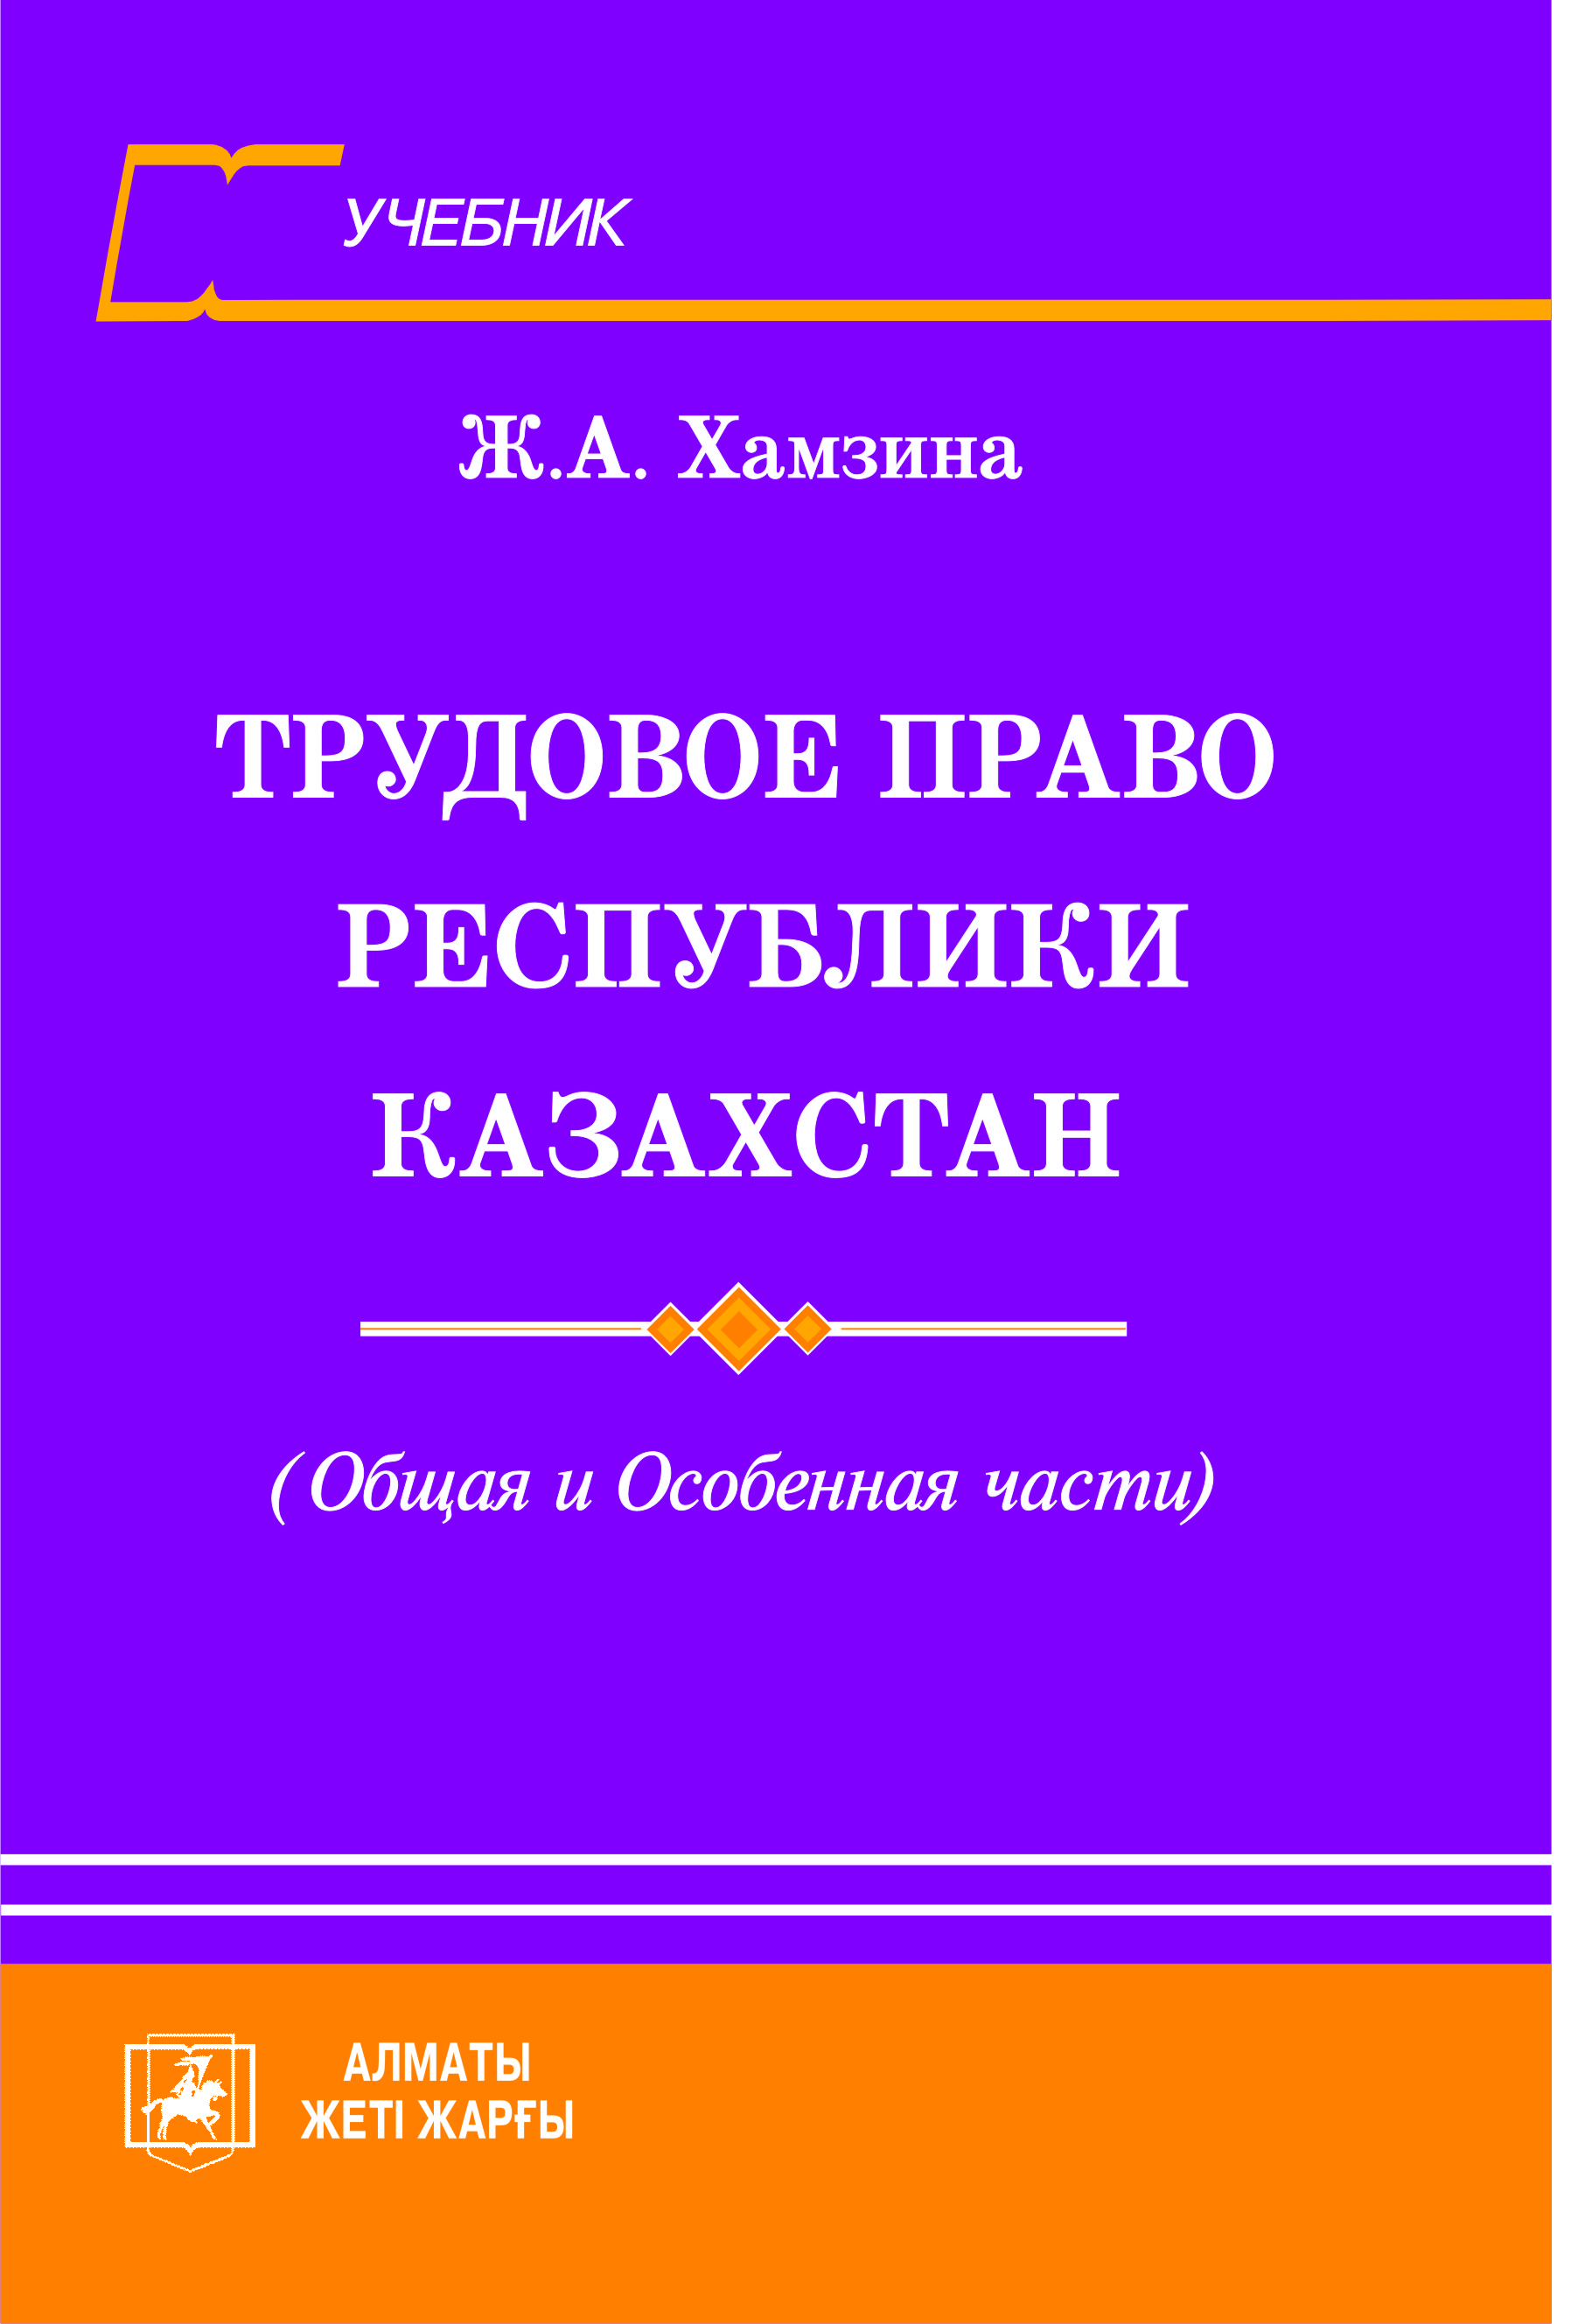 Трудовое право Республики Казахстан 2014 г. / Хамзина Ж.А. — Жетi Жарғы